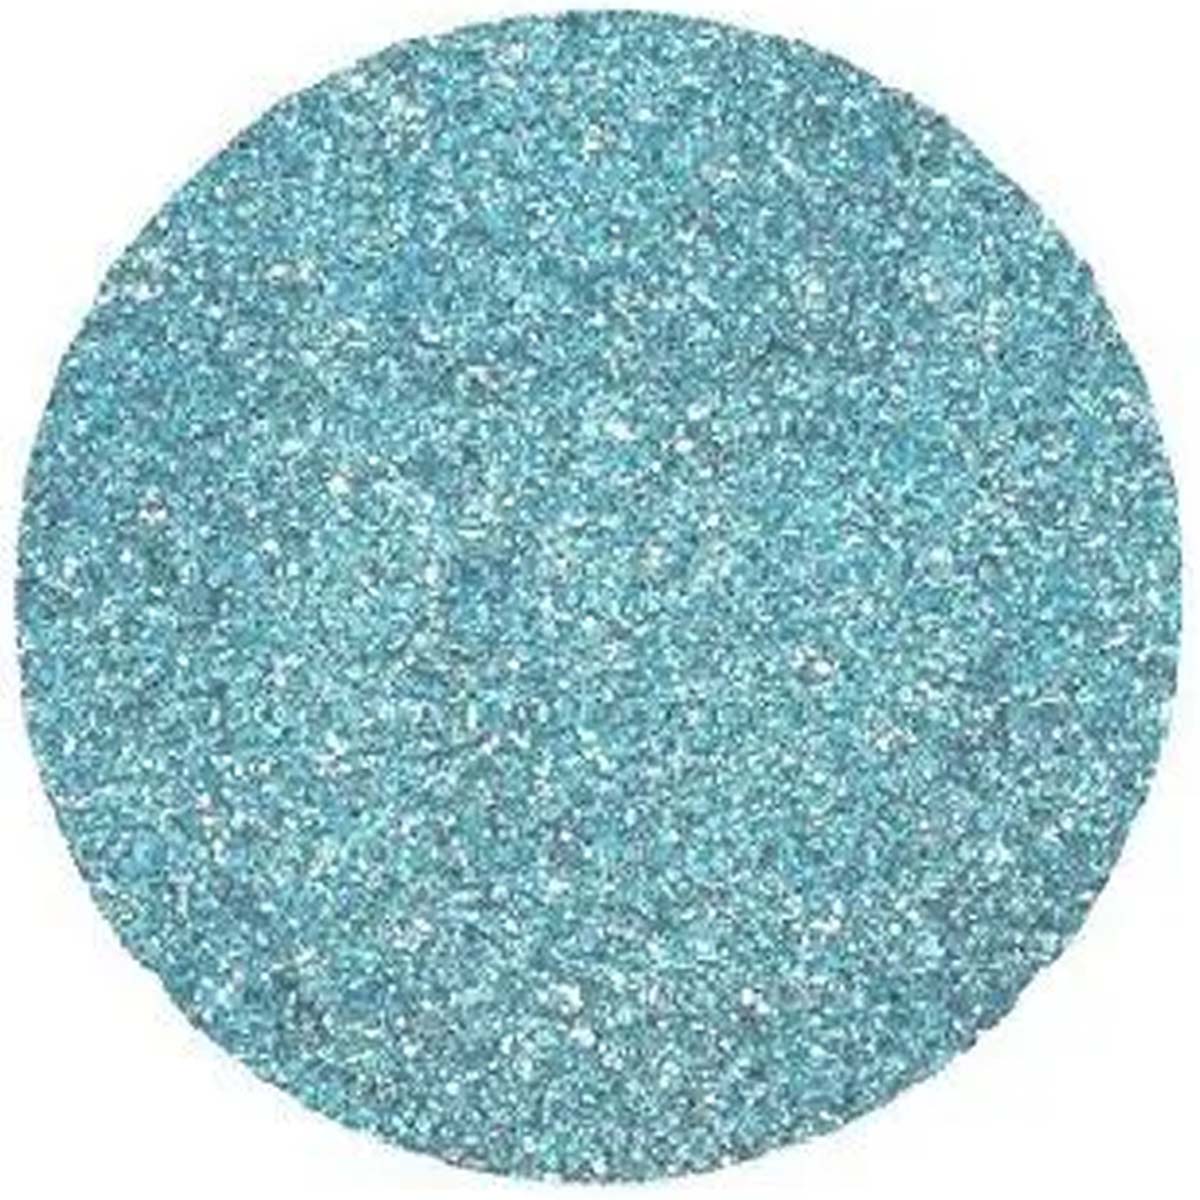 Glitter Purpurina PVC 500g - Azul Turquesa